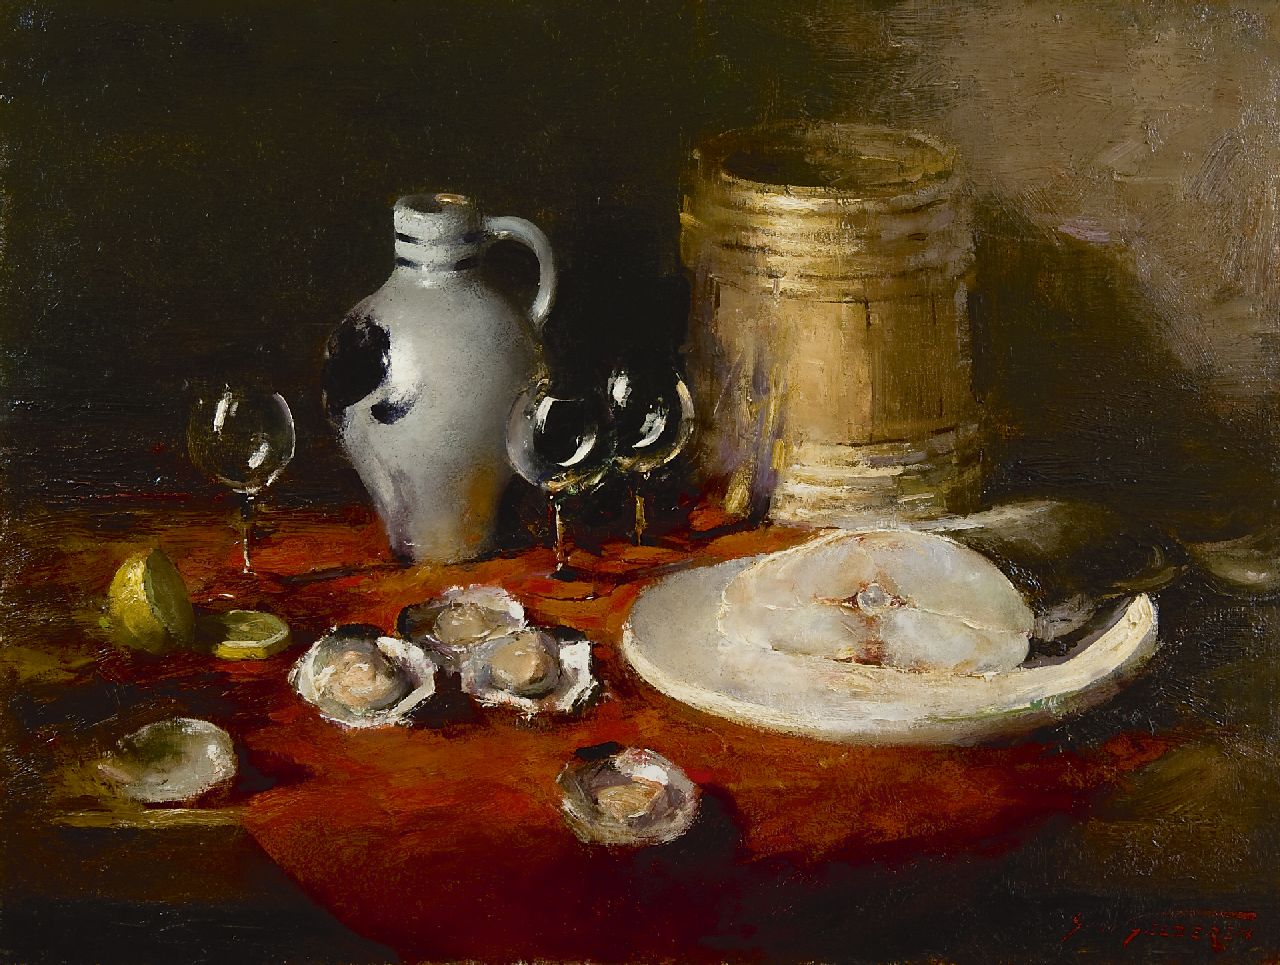 Gelderen S. van | Simon van Gelderen, Still life with oysters, jar and fish, oil on canvas 60.1 x 80.0 cm, signed l.r.